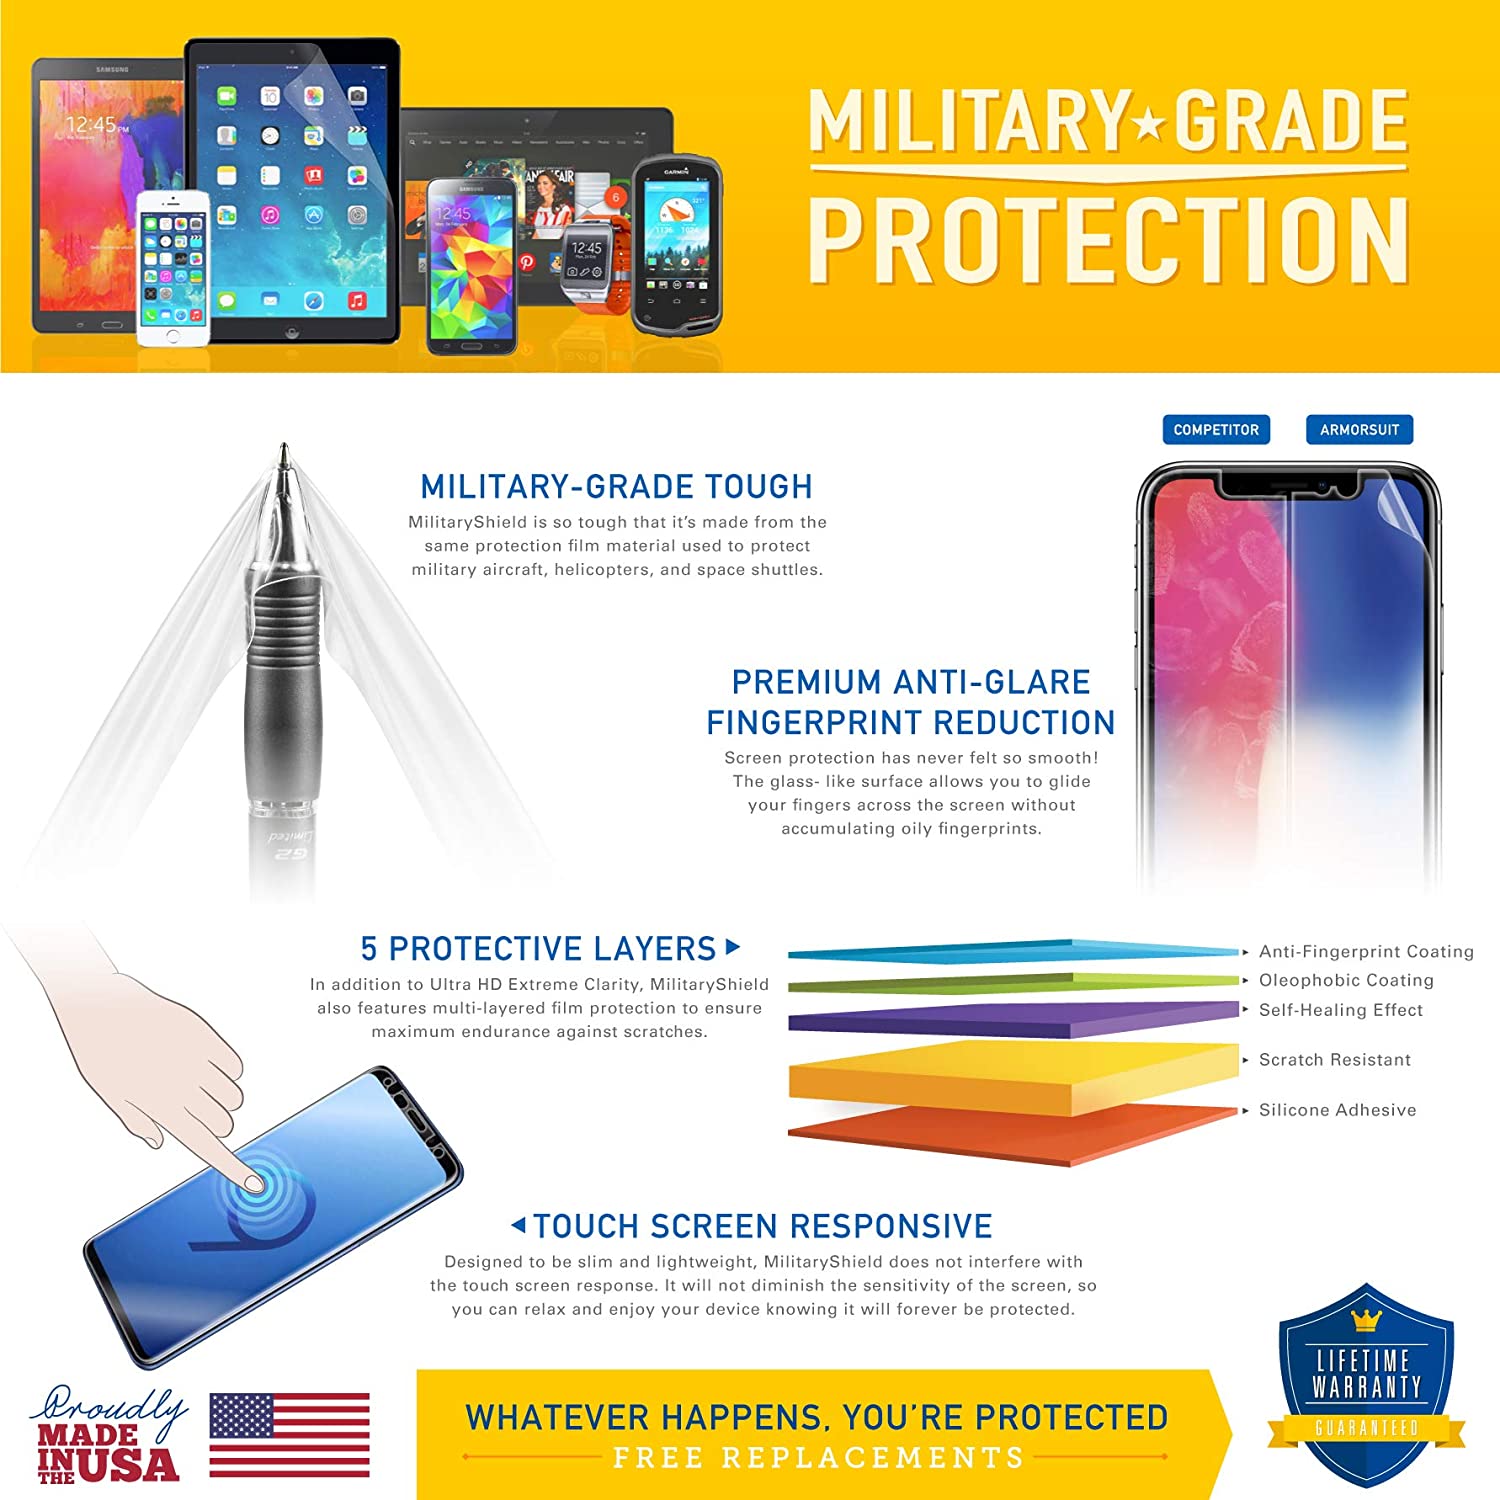 [2 Pack] Motorola G Play Screen Protector